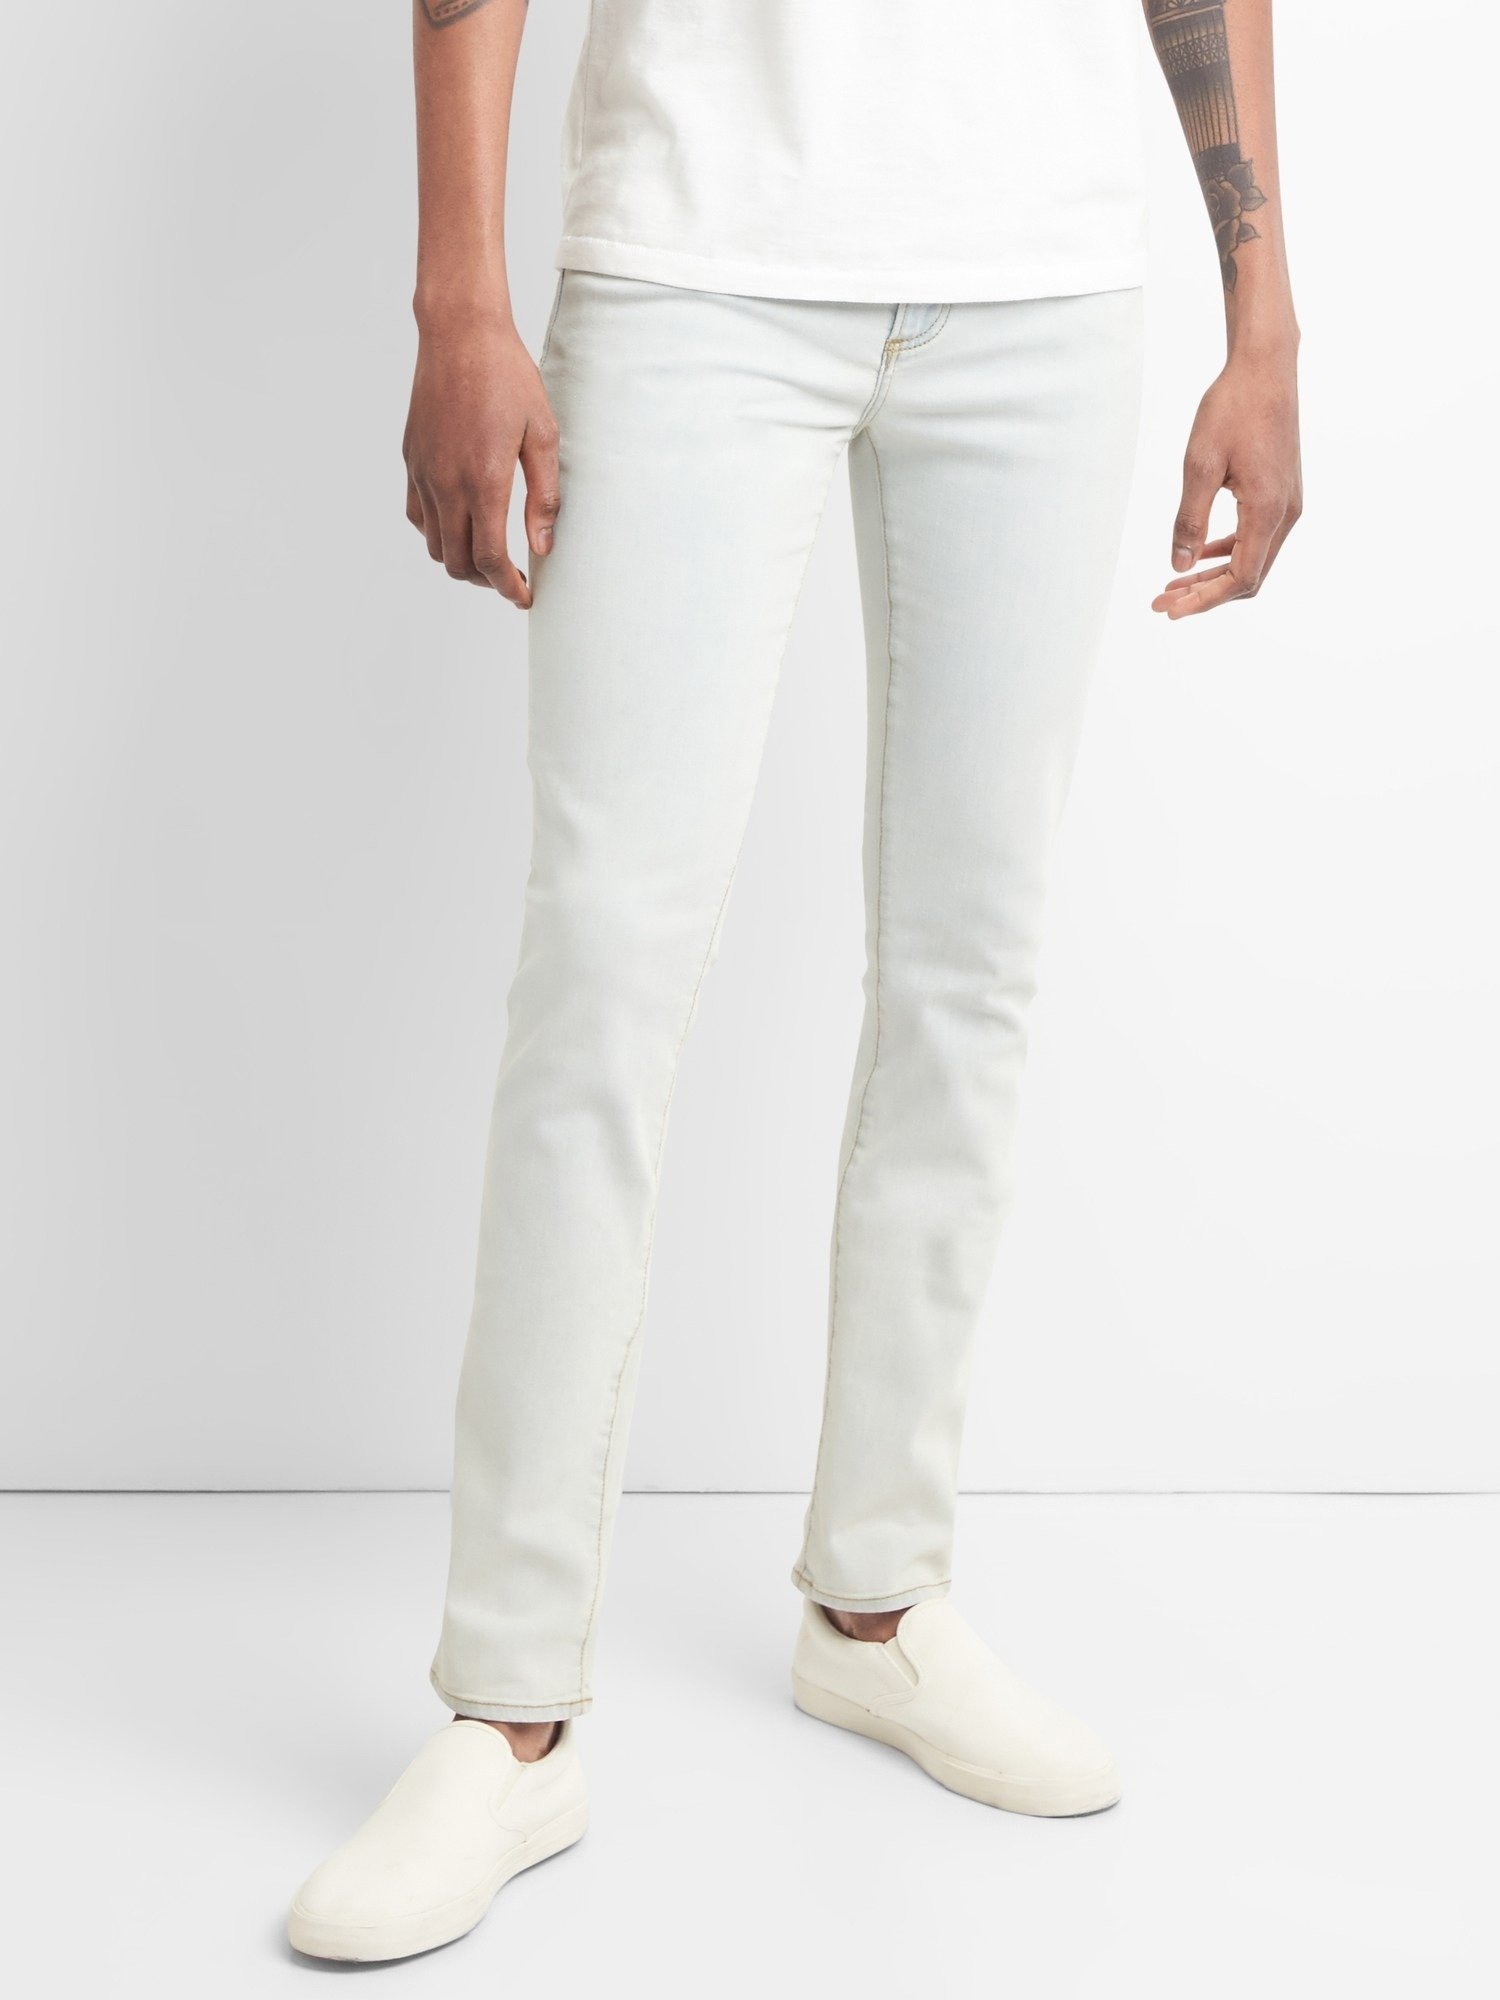 Wearlight Skinny Fit Gapflex Jean Pantolon product image